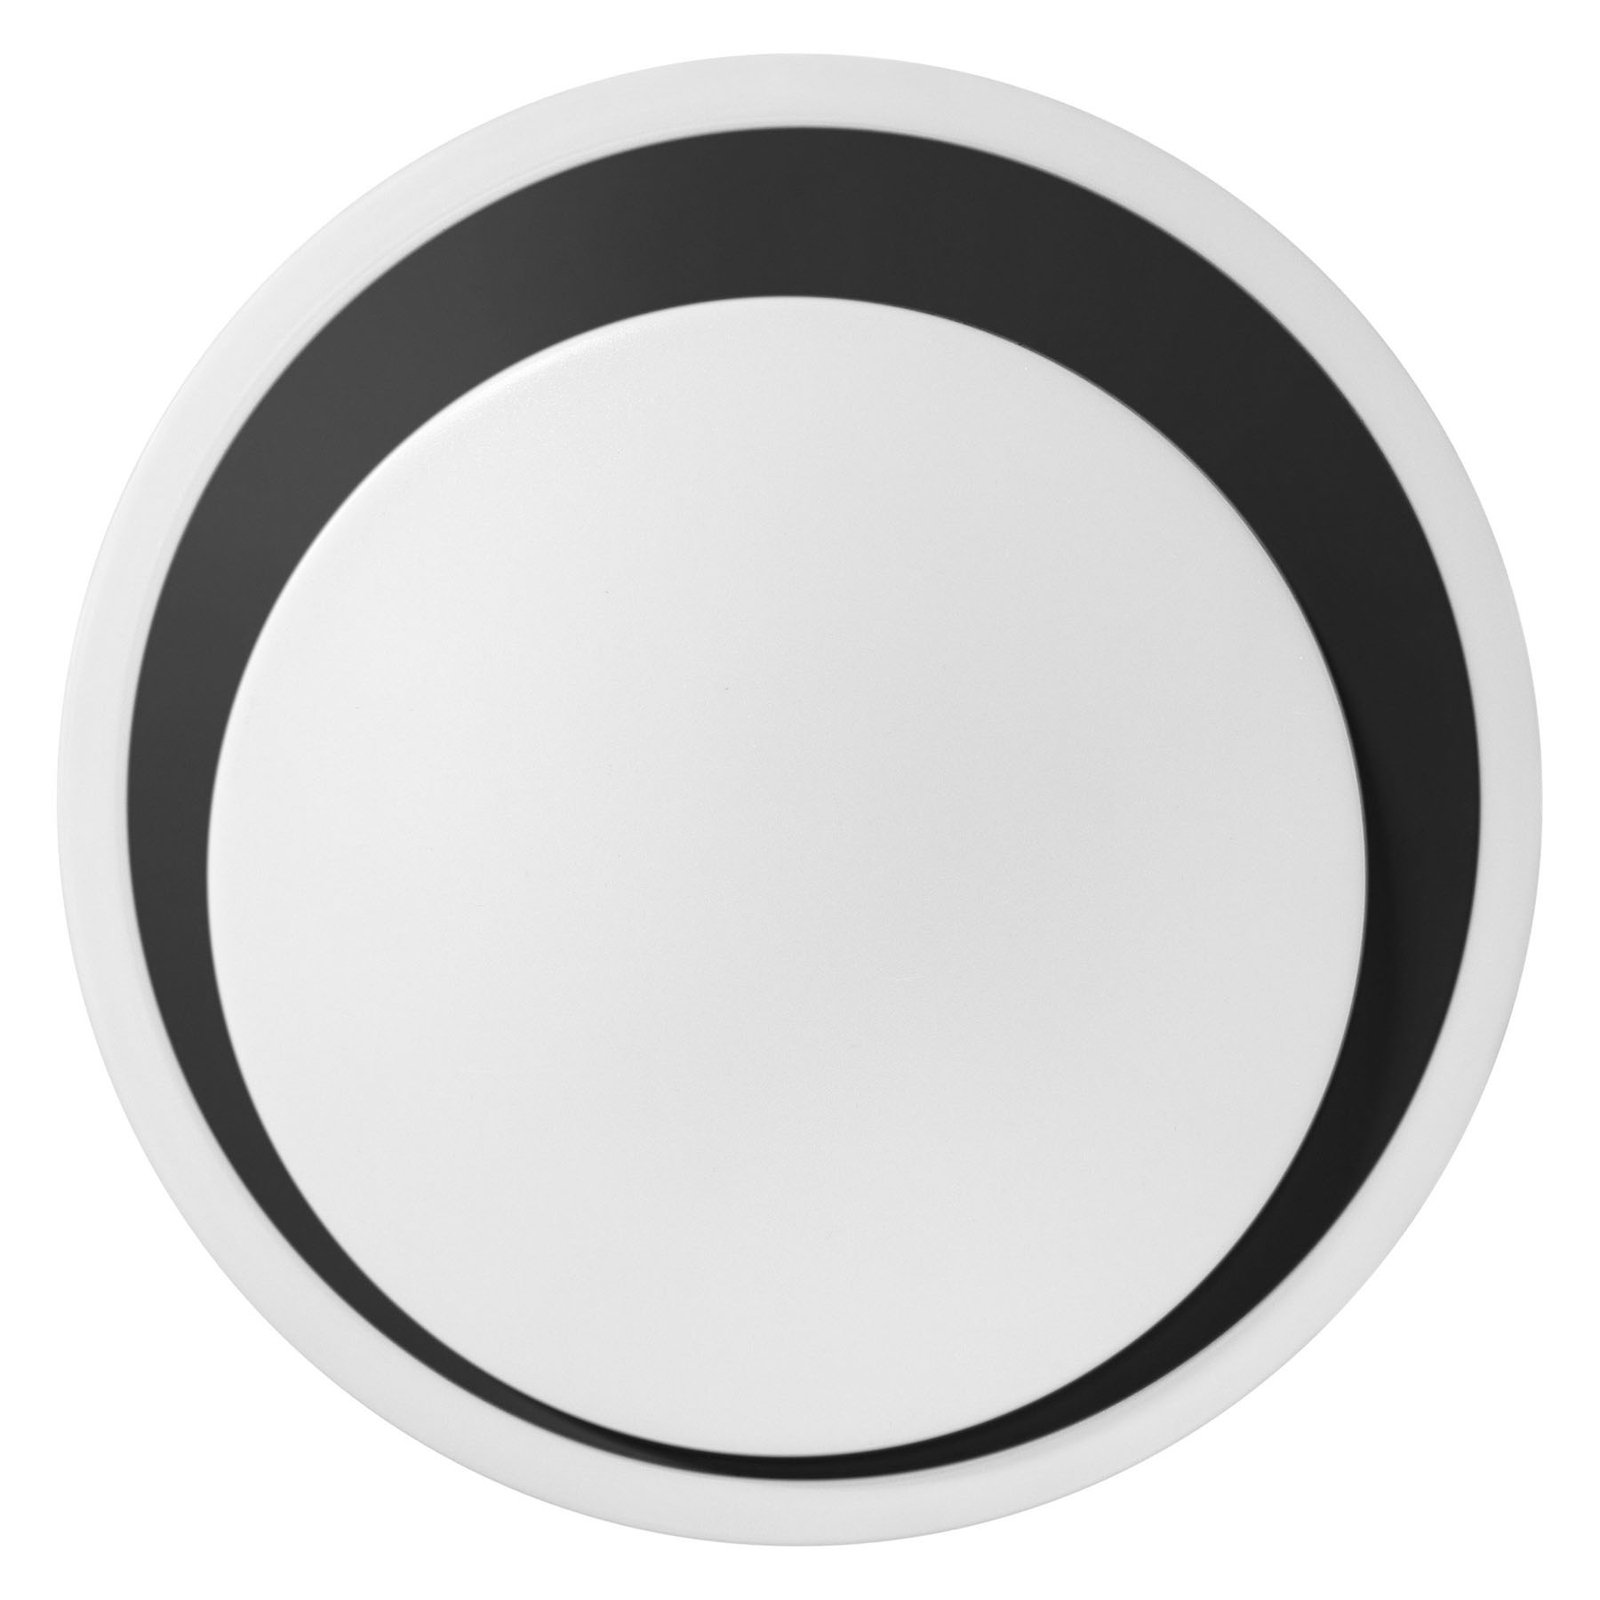 LEDVANCE SMART+ WiFi Orbis Moon CCT 38cm schwarz